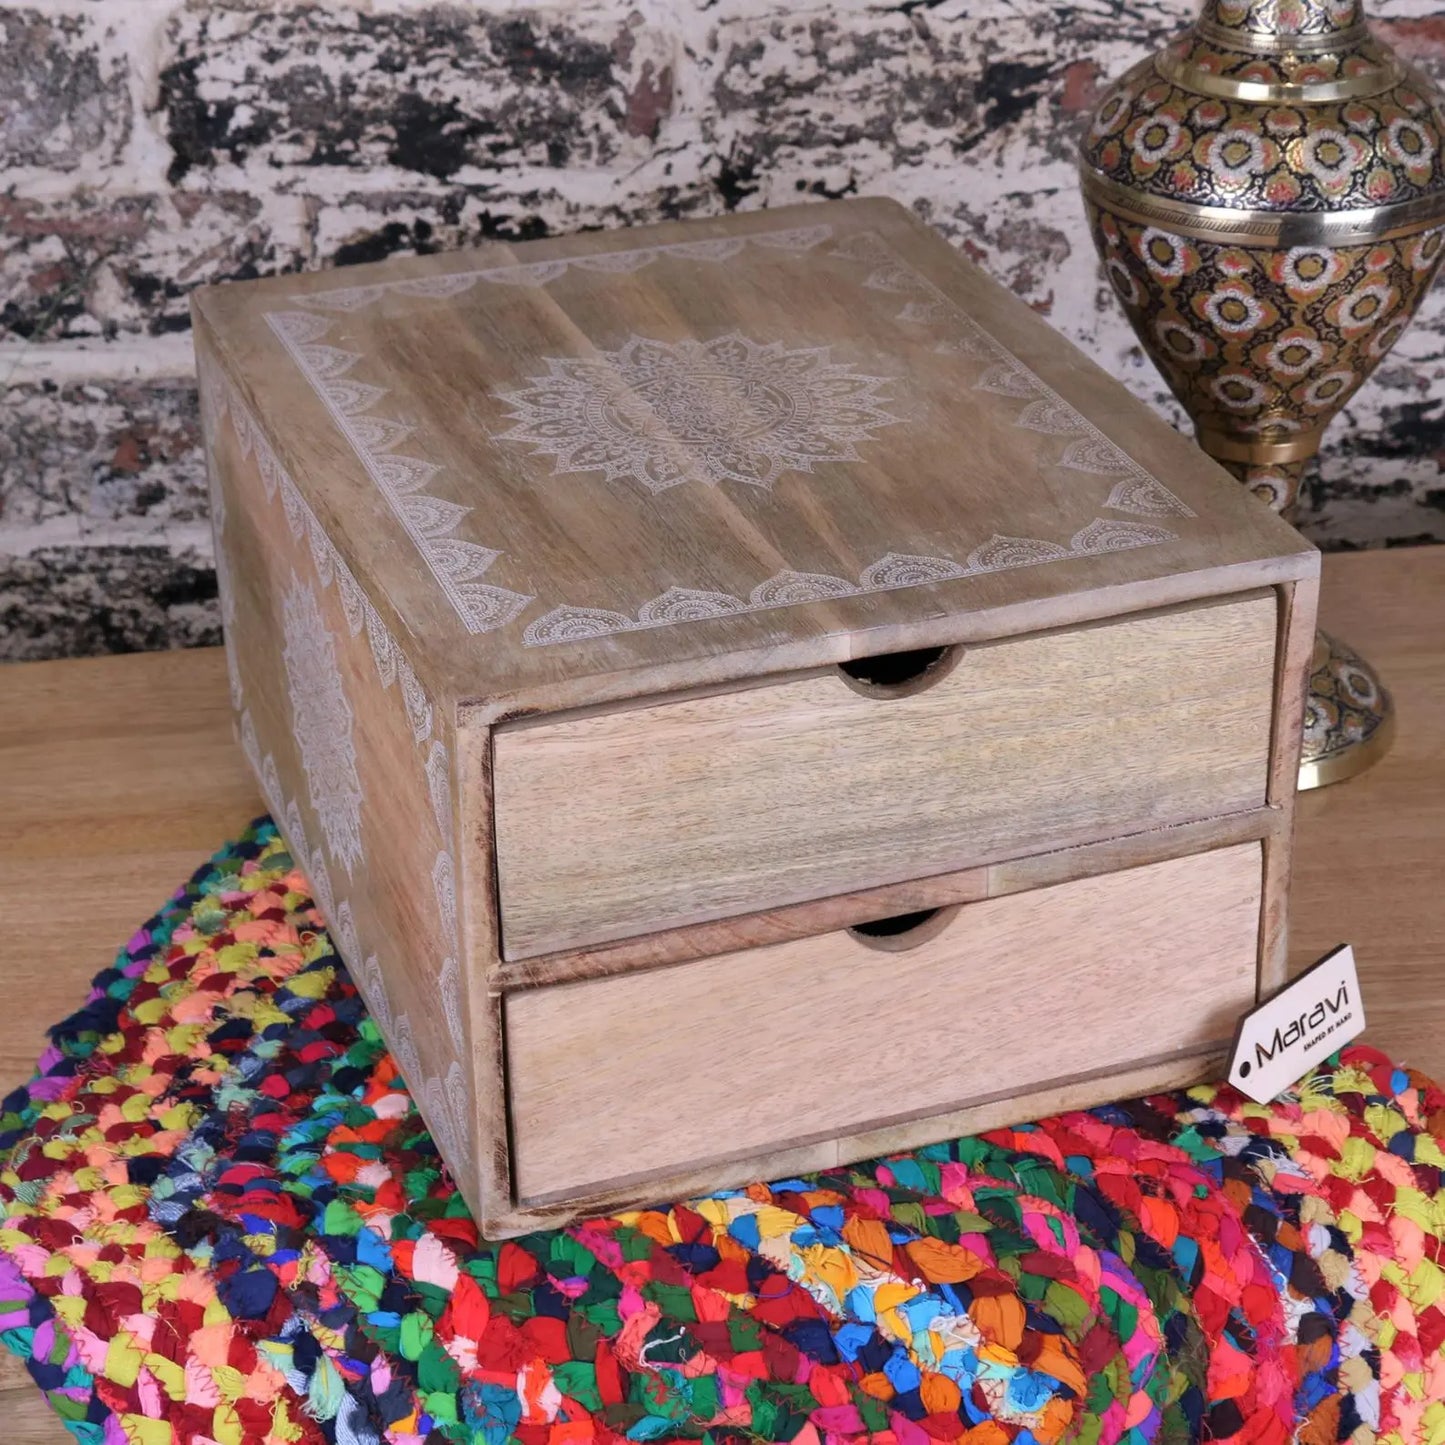 Hijla Mango Wood A4 Filing Box 2 Drawers Mandala Design - Main Image